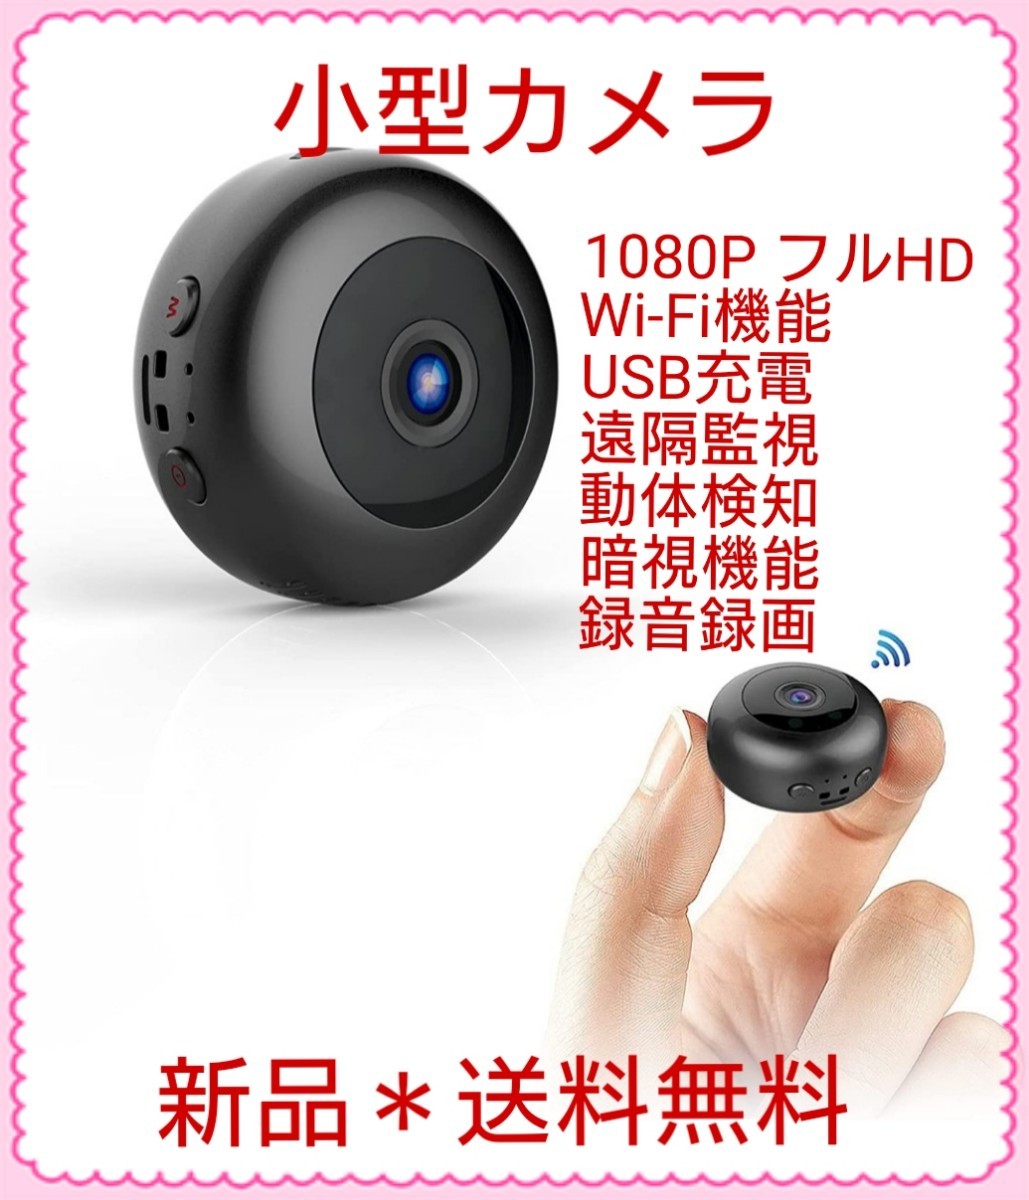 小型カメラ 1080PフルHD Wi-Fi USB充電 遠隔監視 動体検知 暗視機能 録音録画